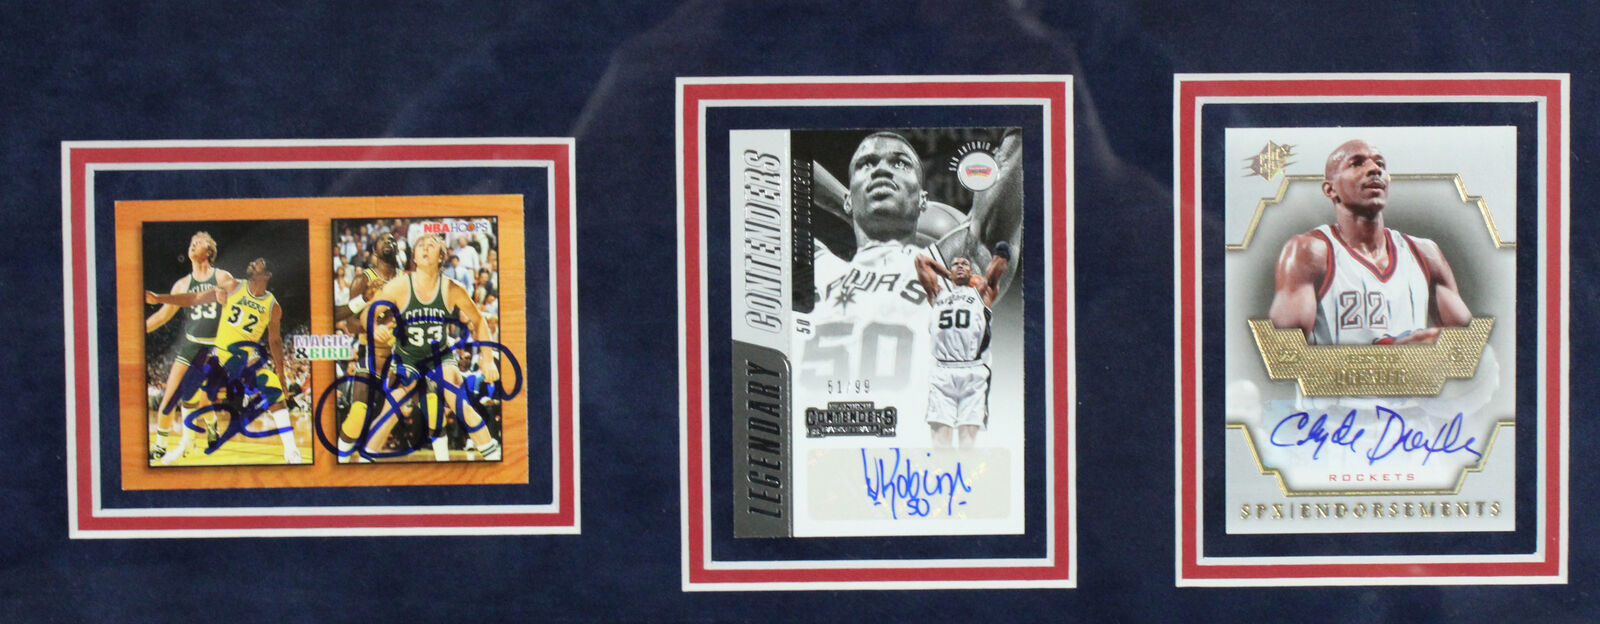 Lot Detail - 1992 USA Dream Team Signed Custom Basketball Card Display ...